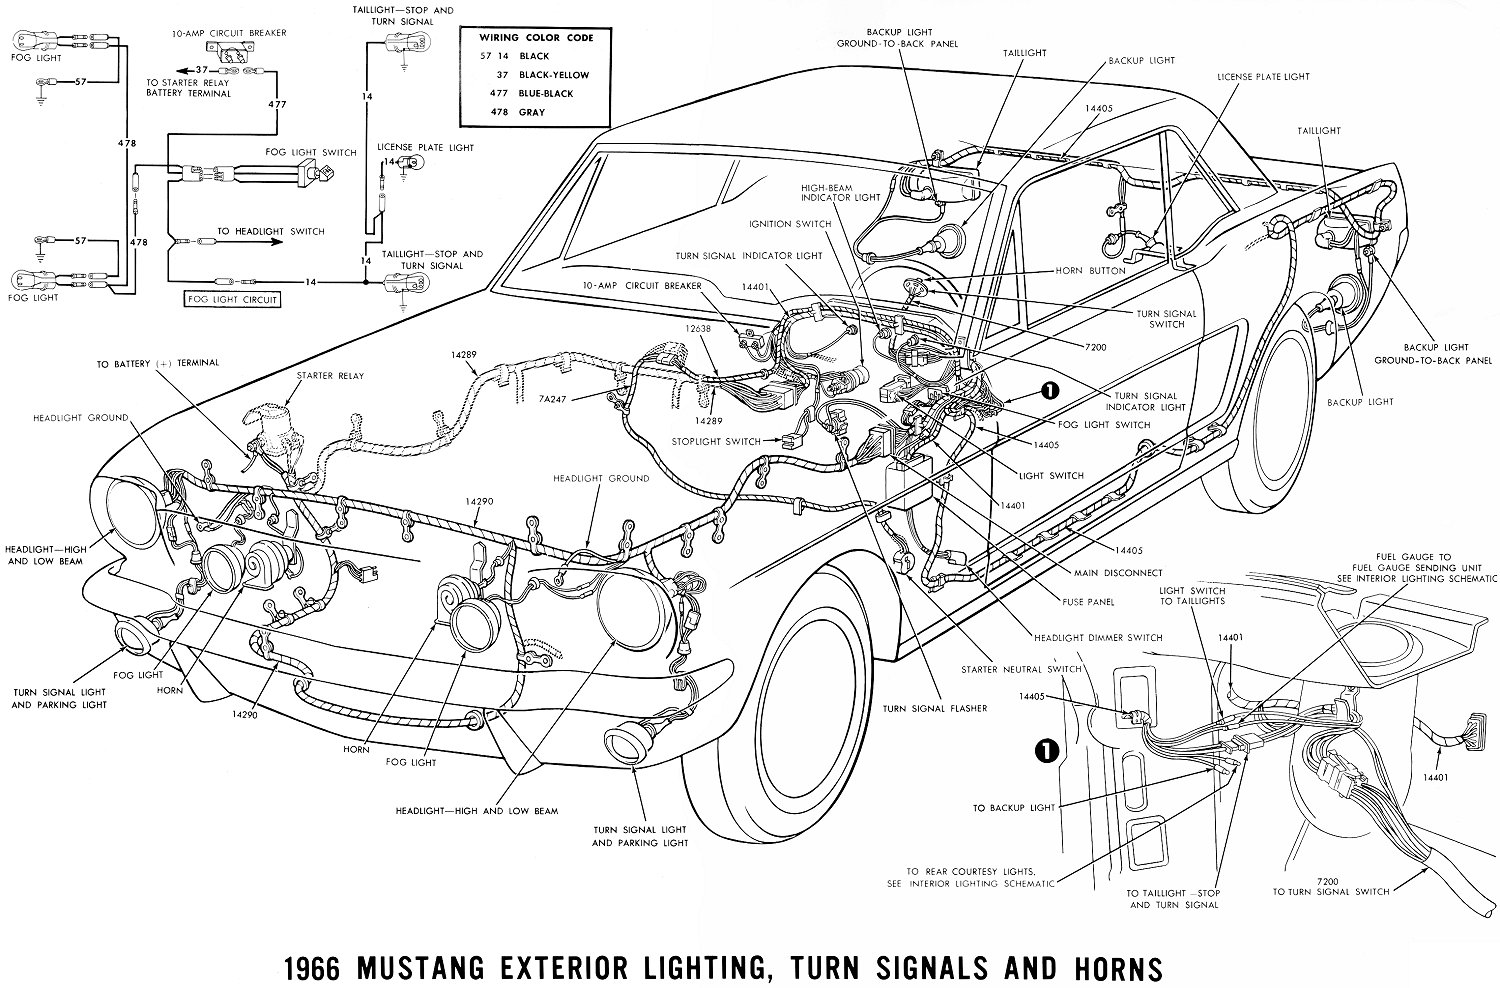 1965 Mustang Headlight Switch Wiring Diagram from averagejoerestoration.com